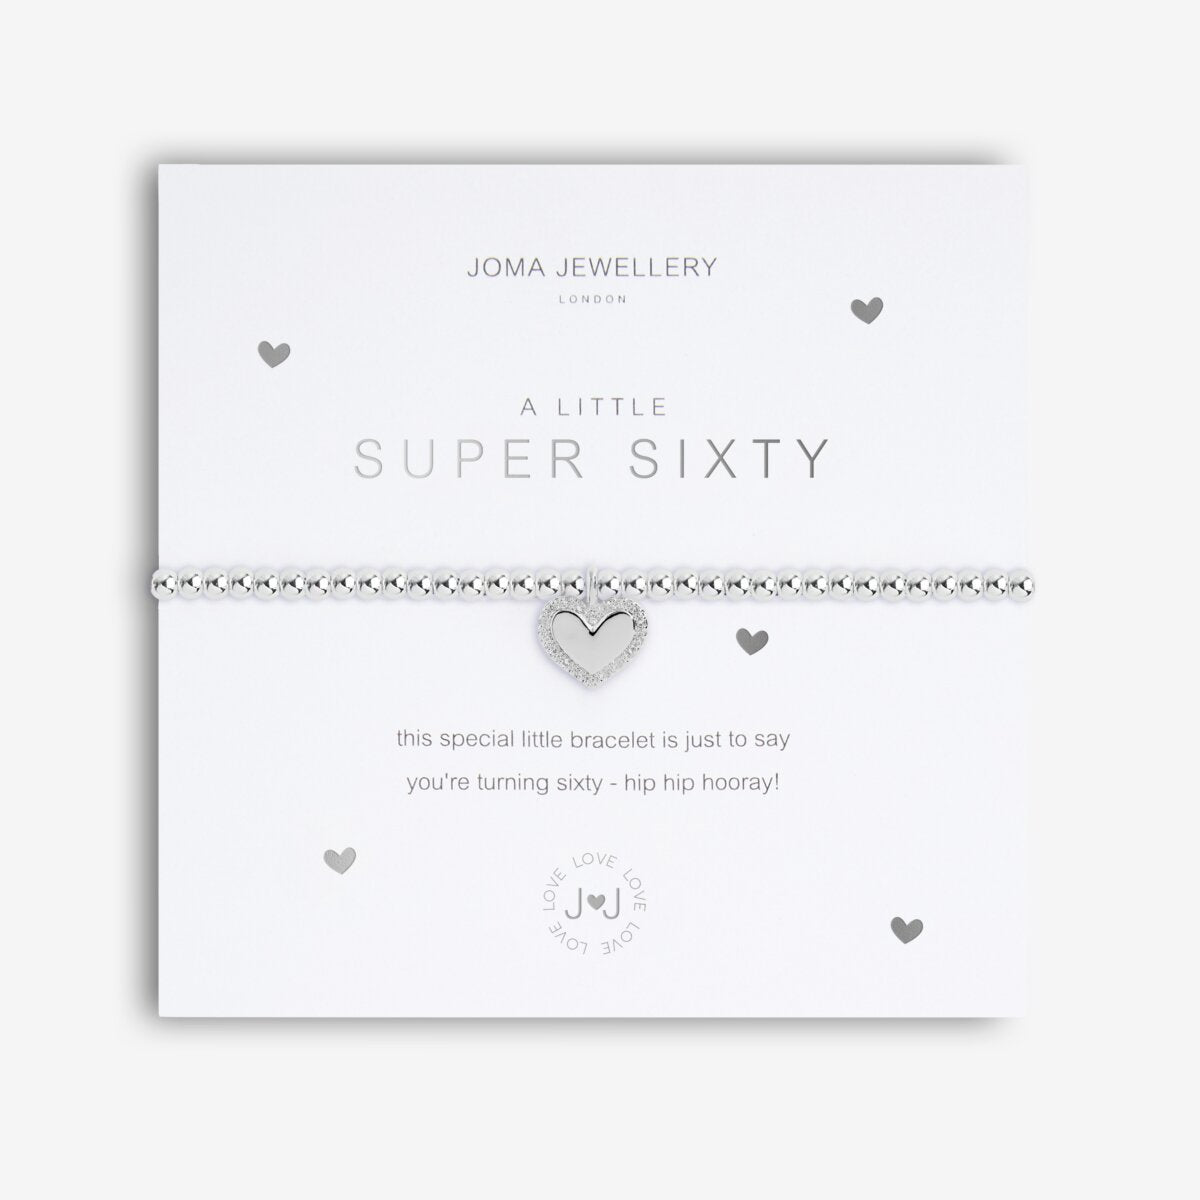 Joma Jewellery 'A Little' Super Sixty